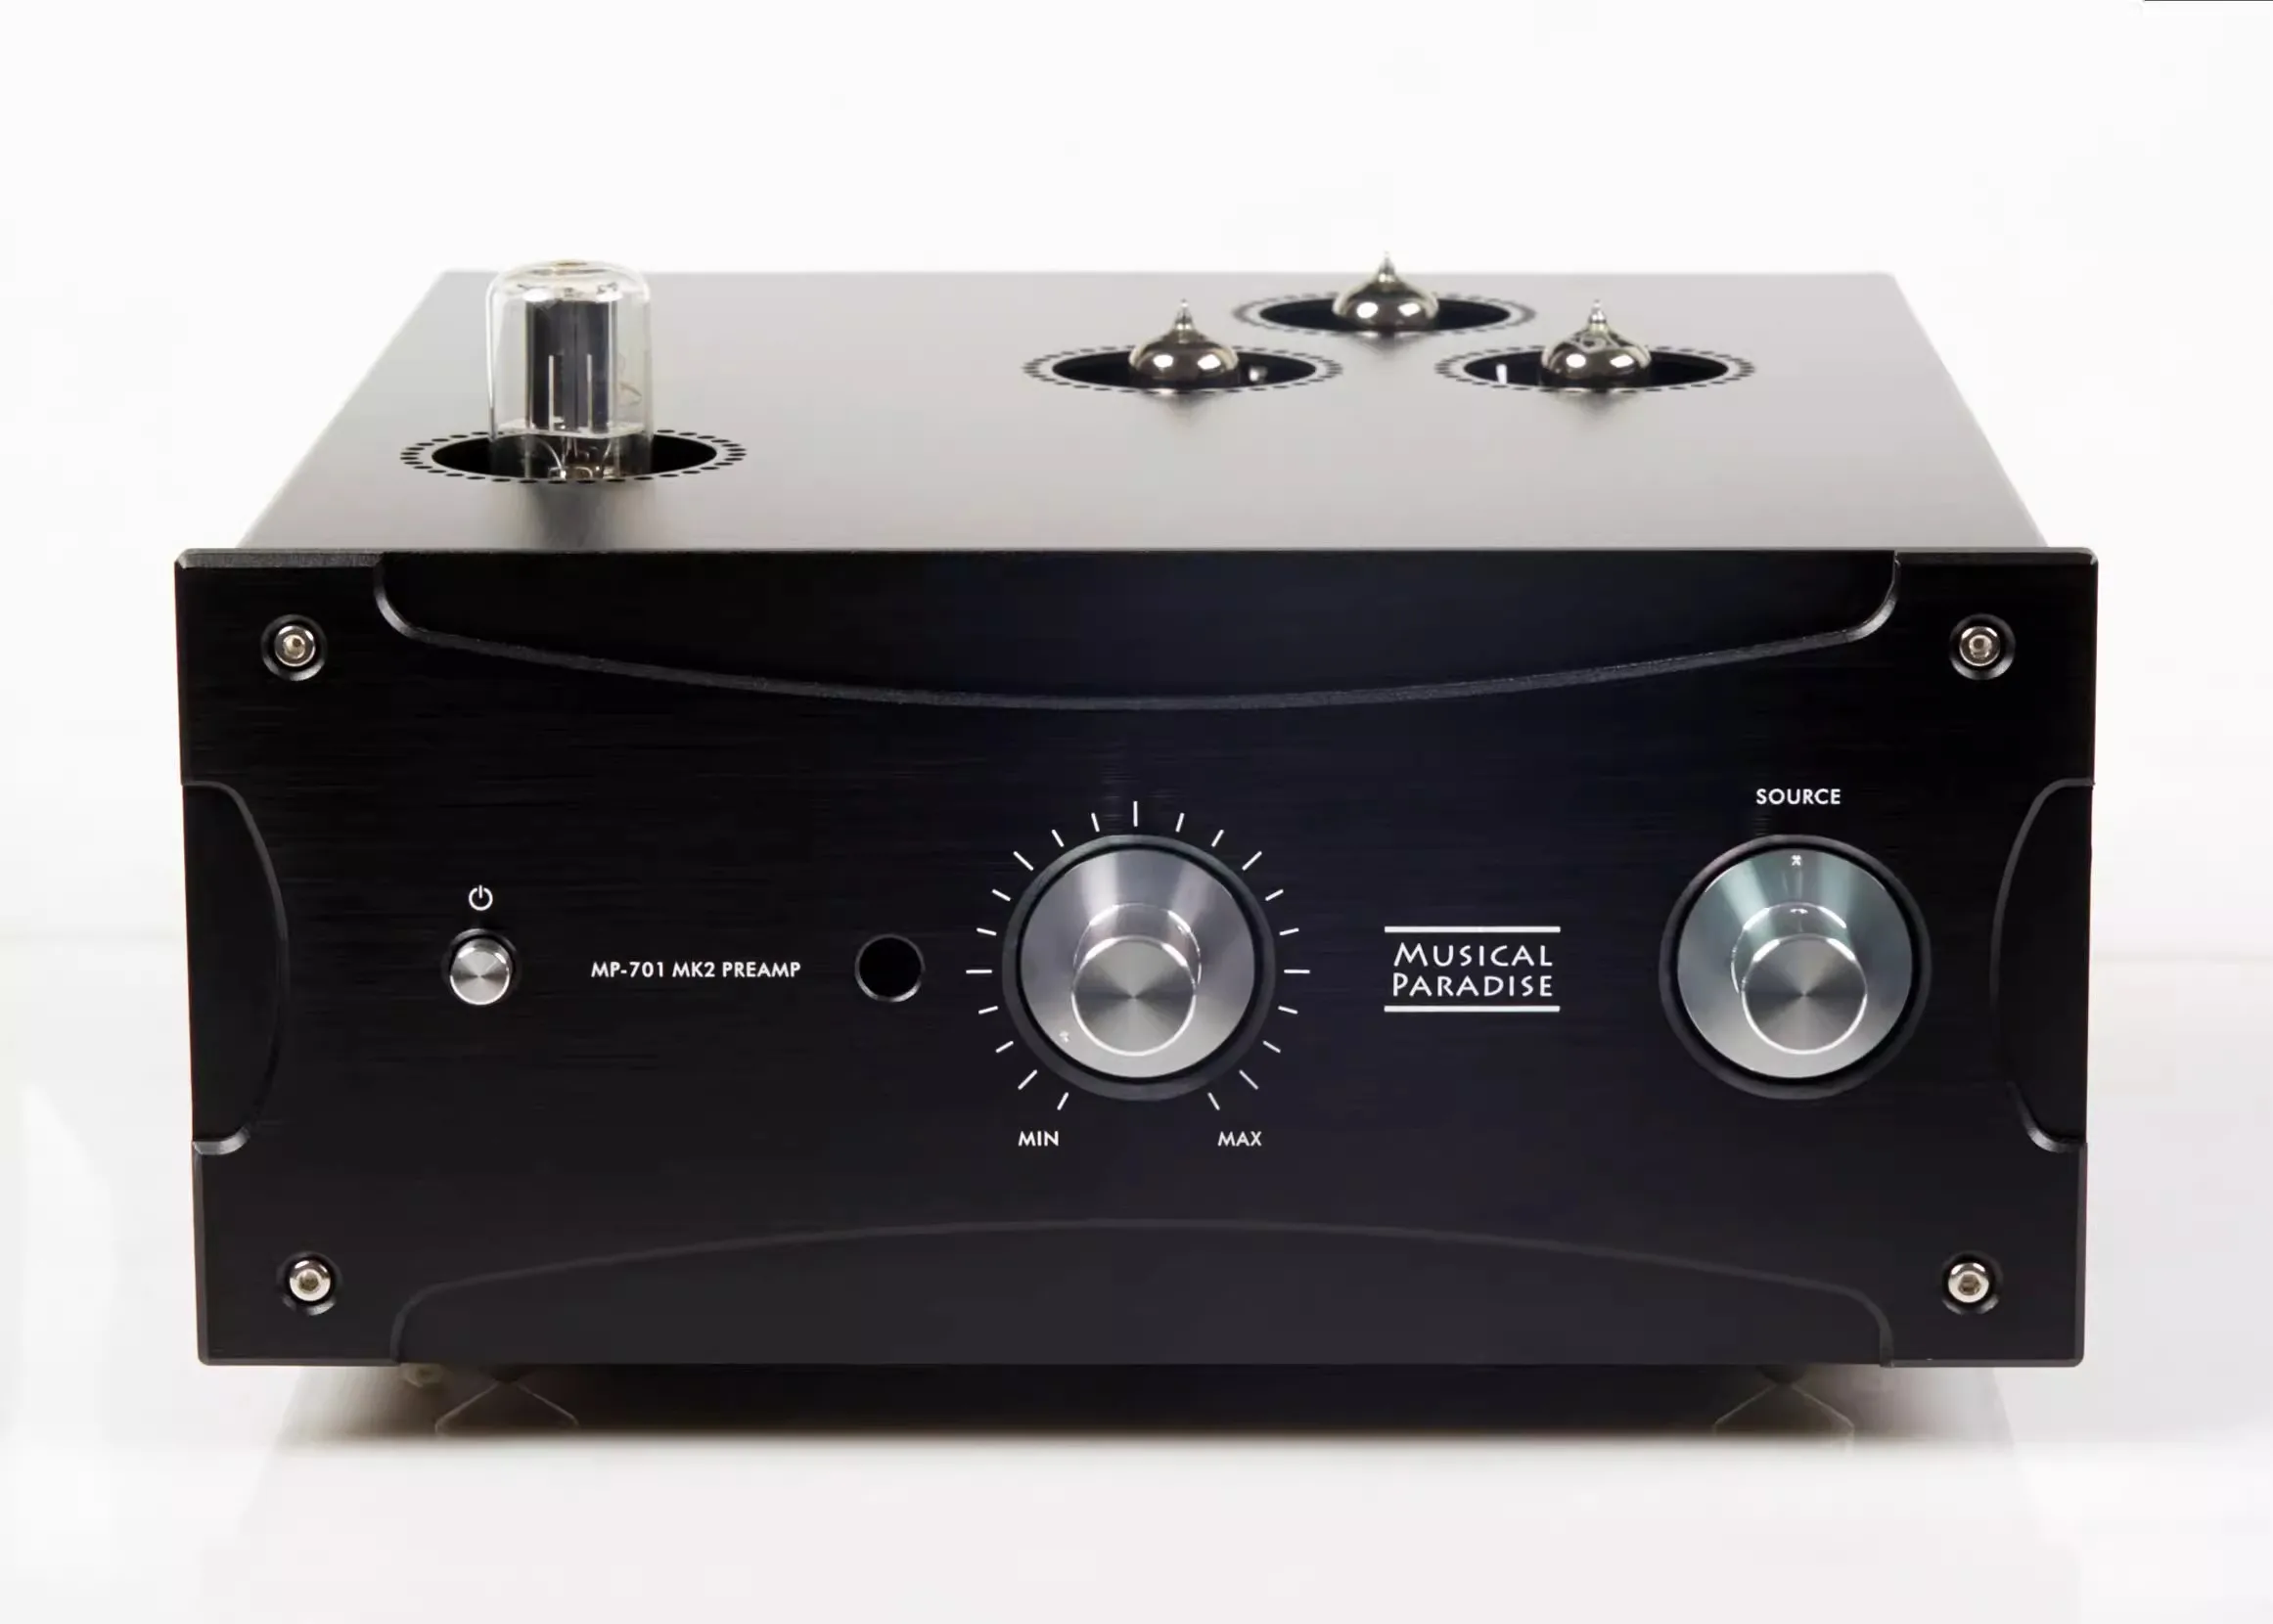 

Musical Paradise MP-701 MK2 Tube Preamp Pre Amplifier Best Preamplifier Match For FM300A Power Amplifier